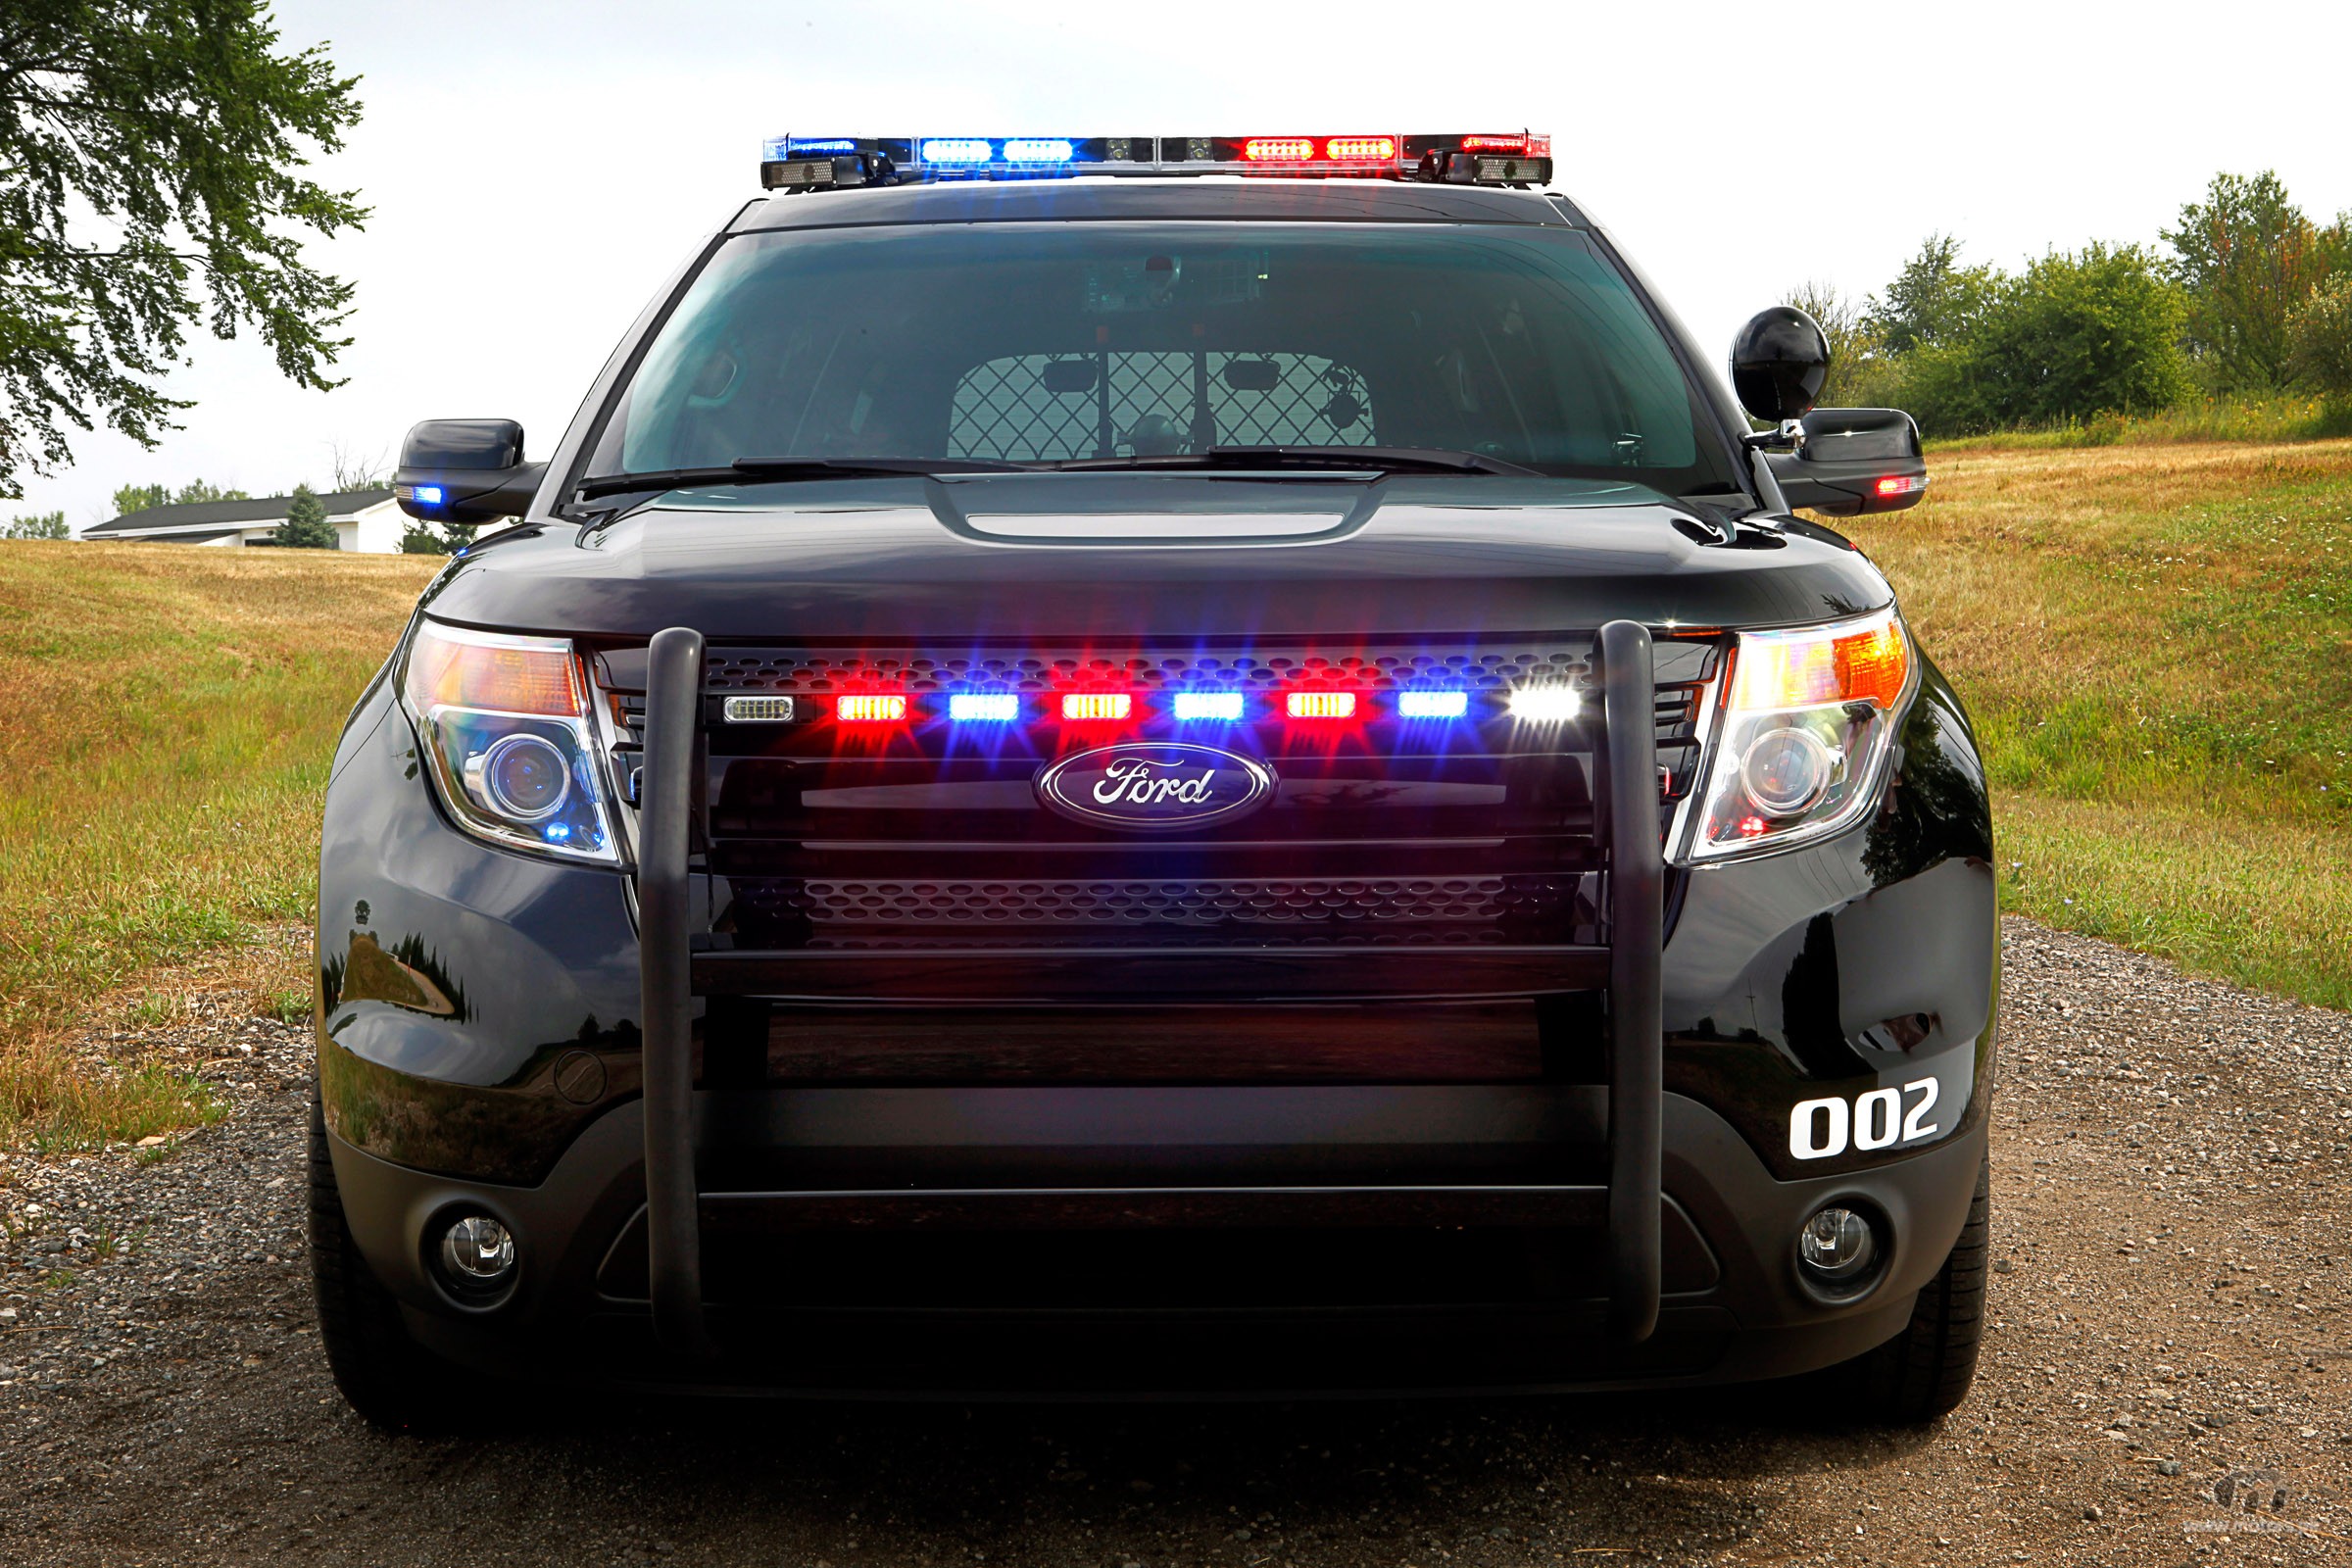 ford-police-interceptor-utility-vehicle